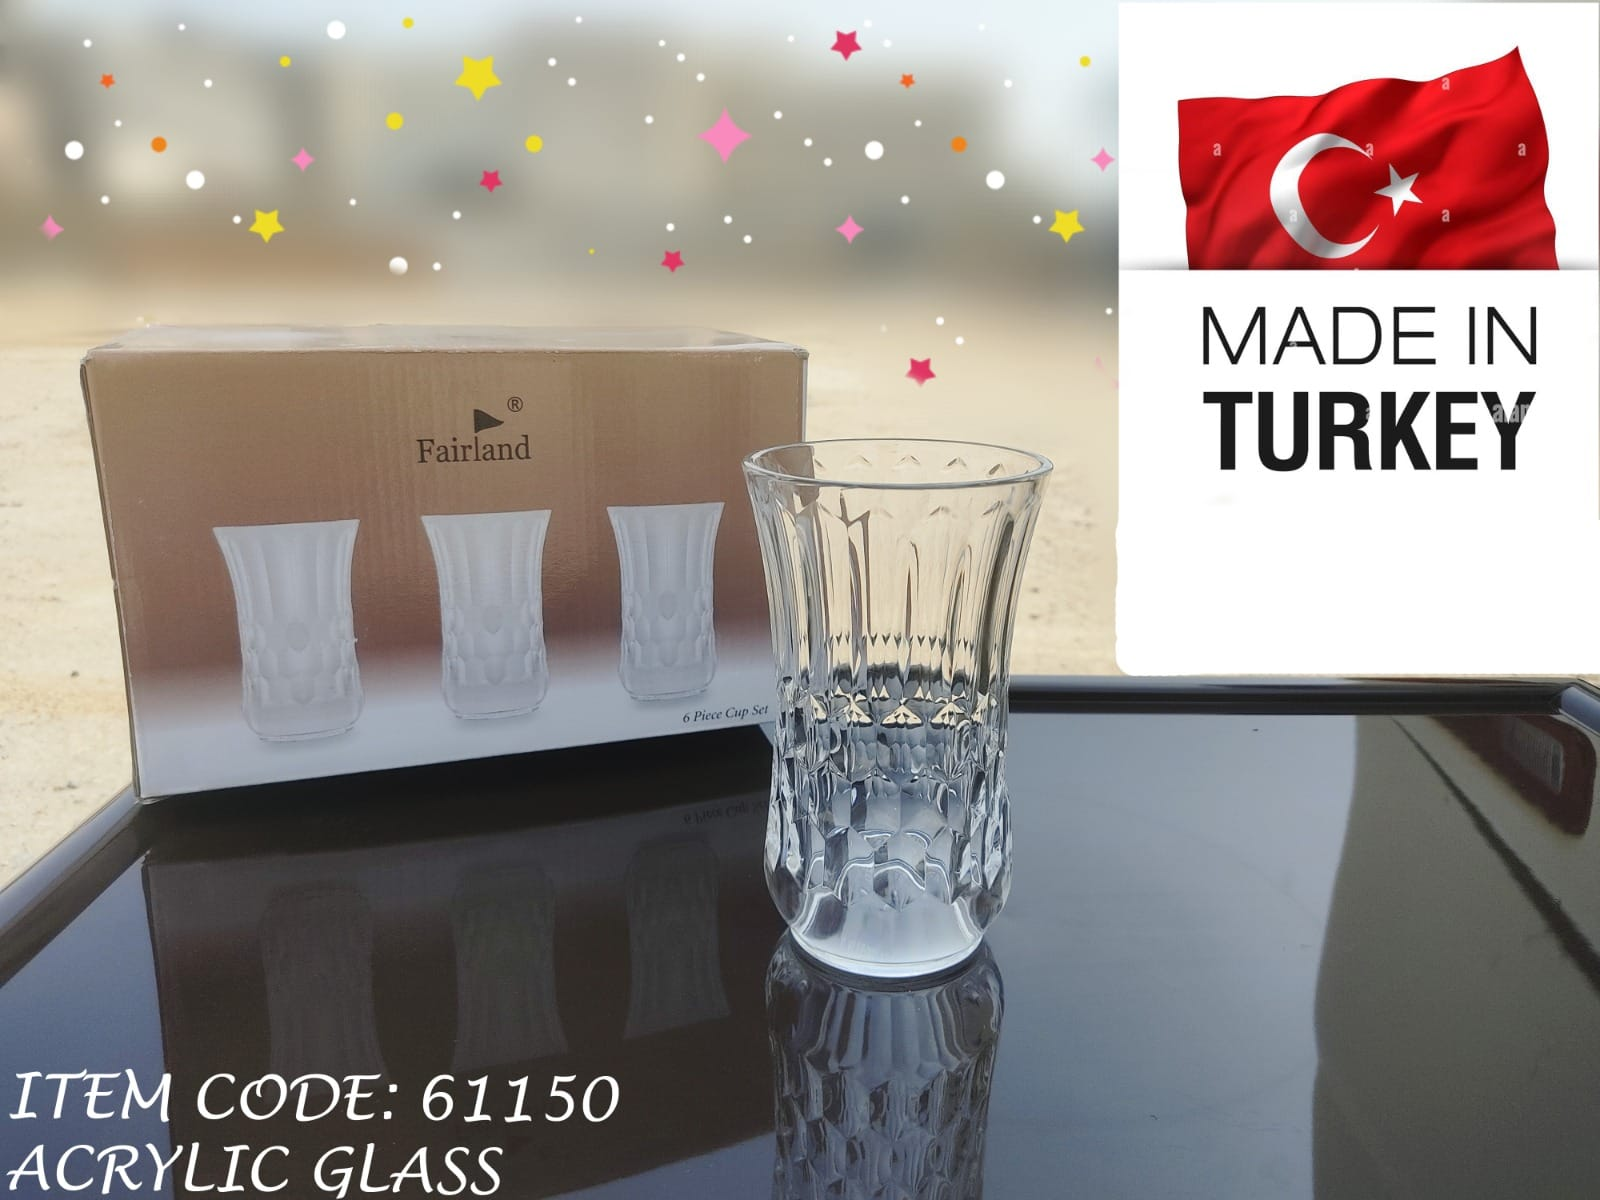 Fairland Acrylic Glass 61150 Set of 6 Turkey Made